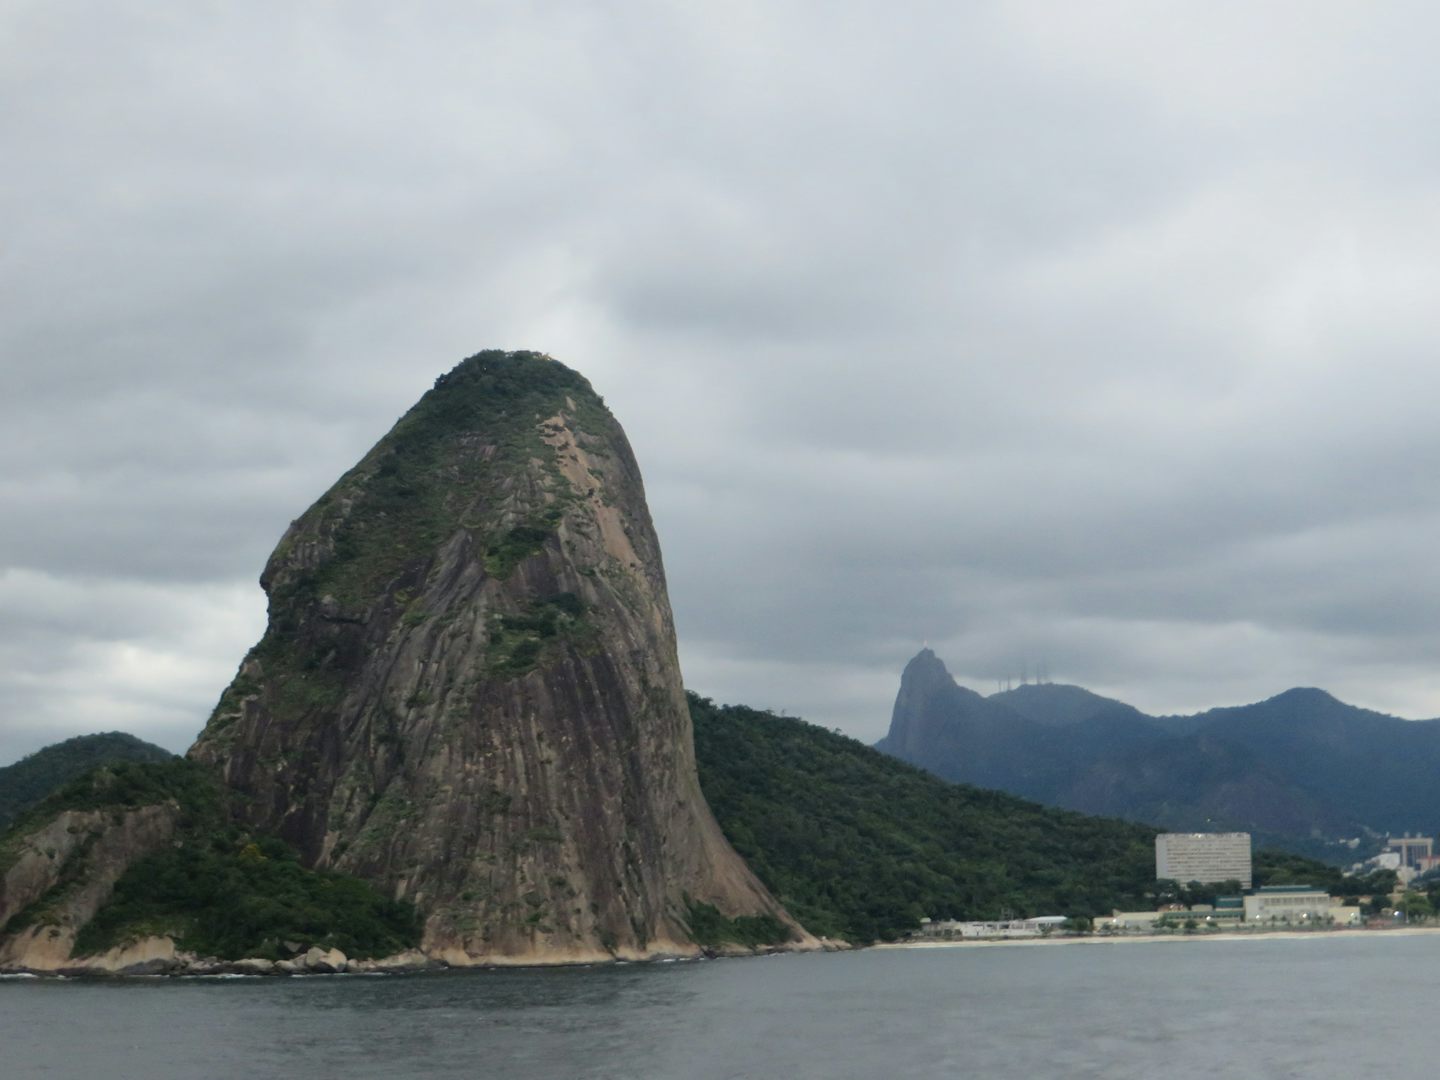 Sugar loaf Mt Rio